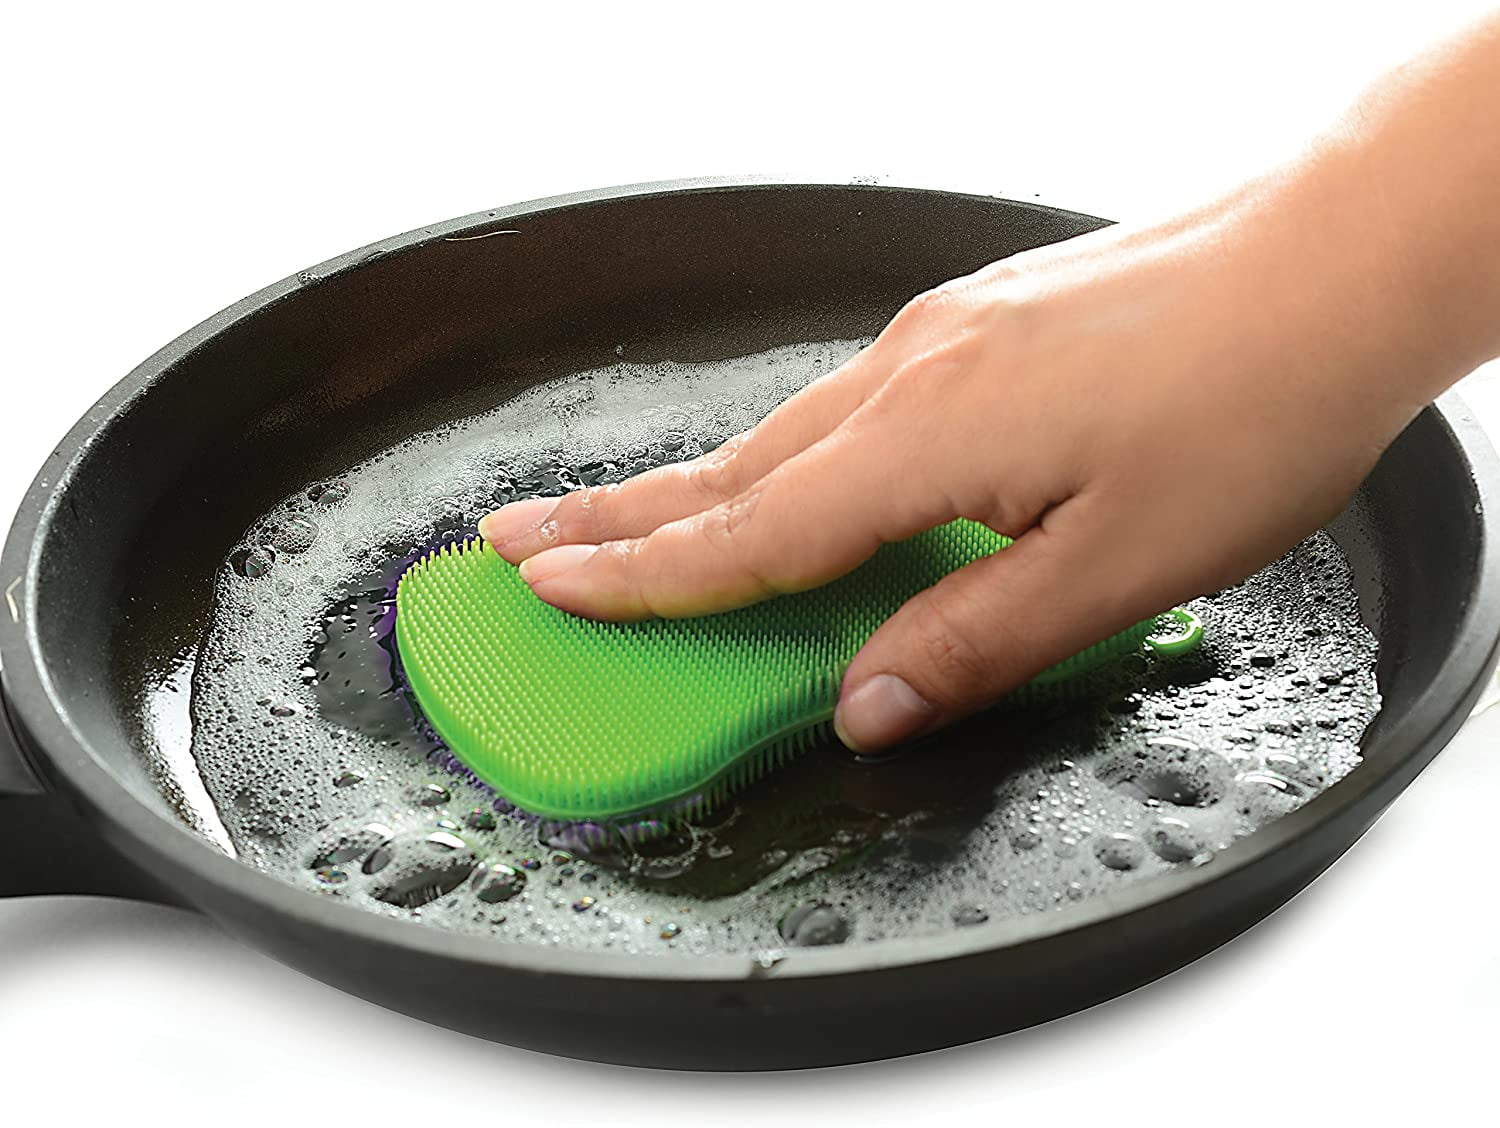 Norpro 1090 Green Silicone Bowtie Dish Brush